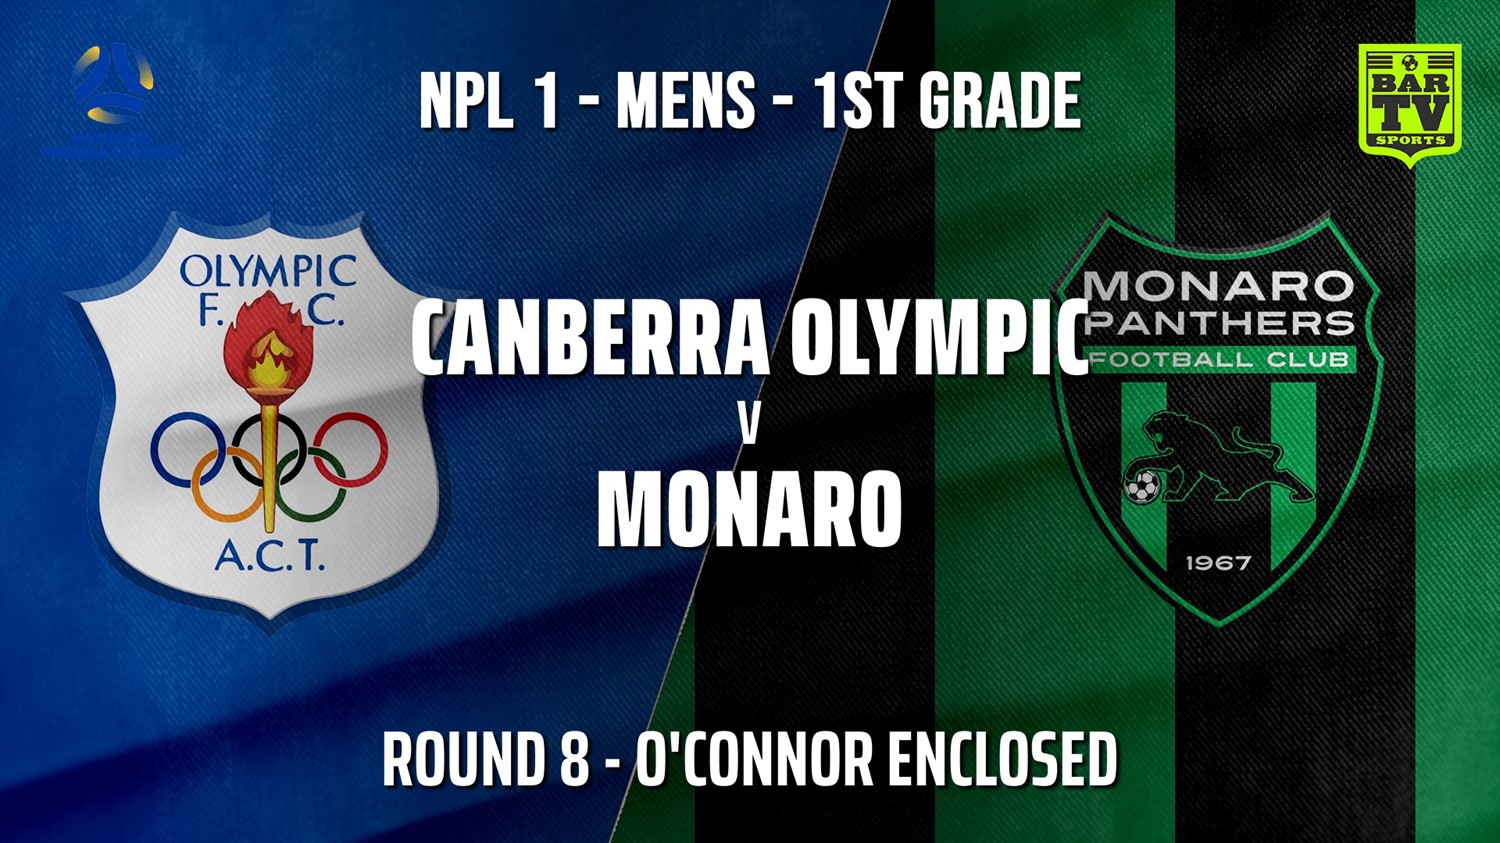 210529-NPL - CAPITAL Round 8 - Canberra Olympic FC v Monaro Panthers FC Minigame Slate Image